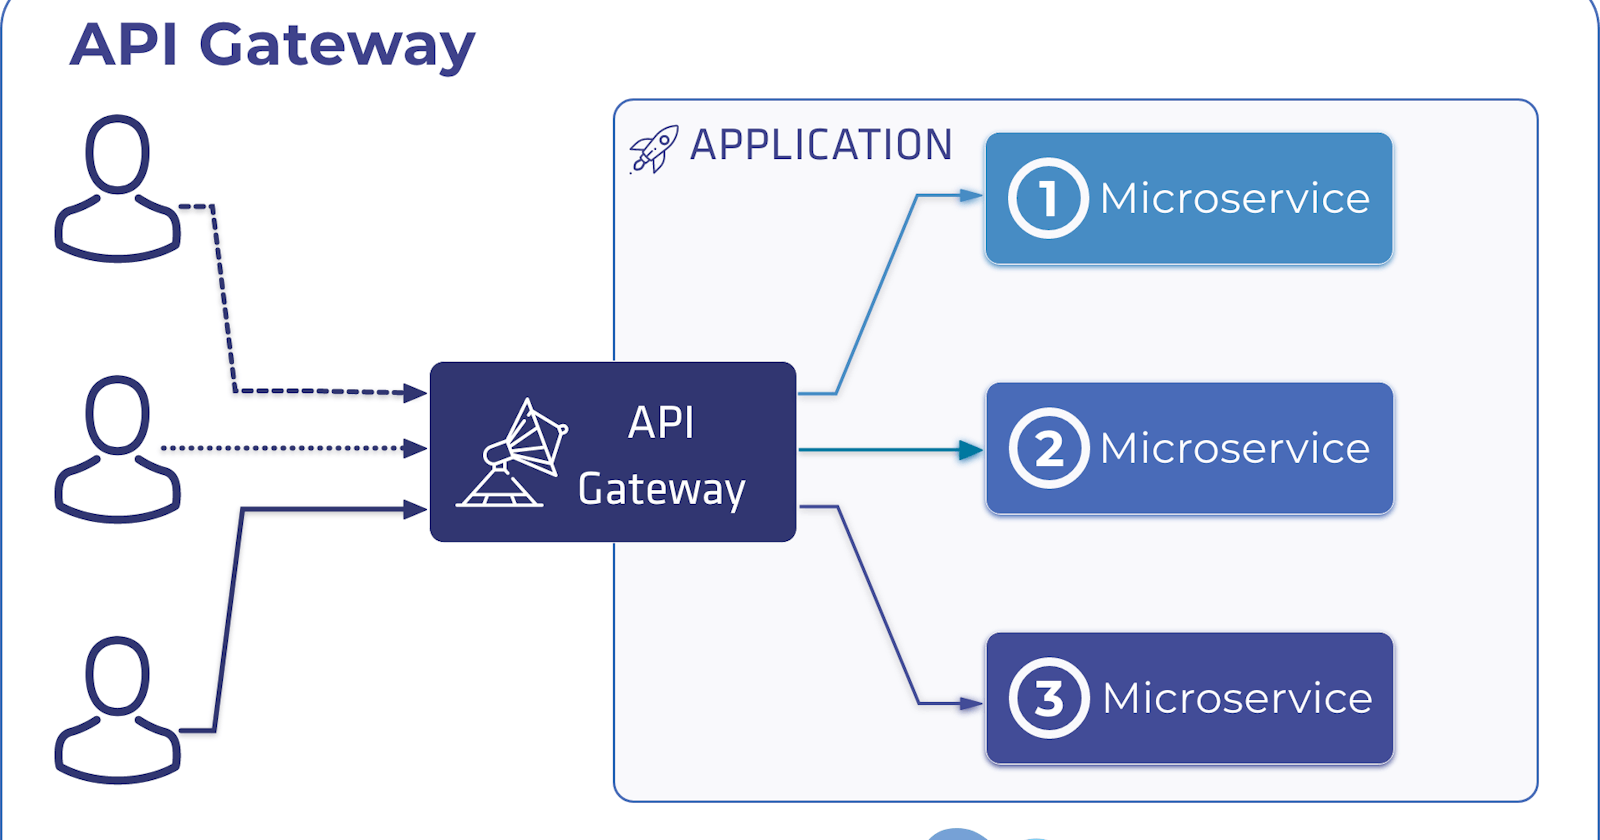 "Microservices Revolution: API Gateways as the Architectural Vanguard"